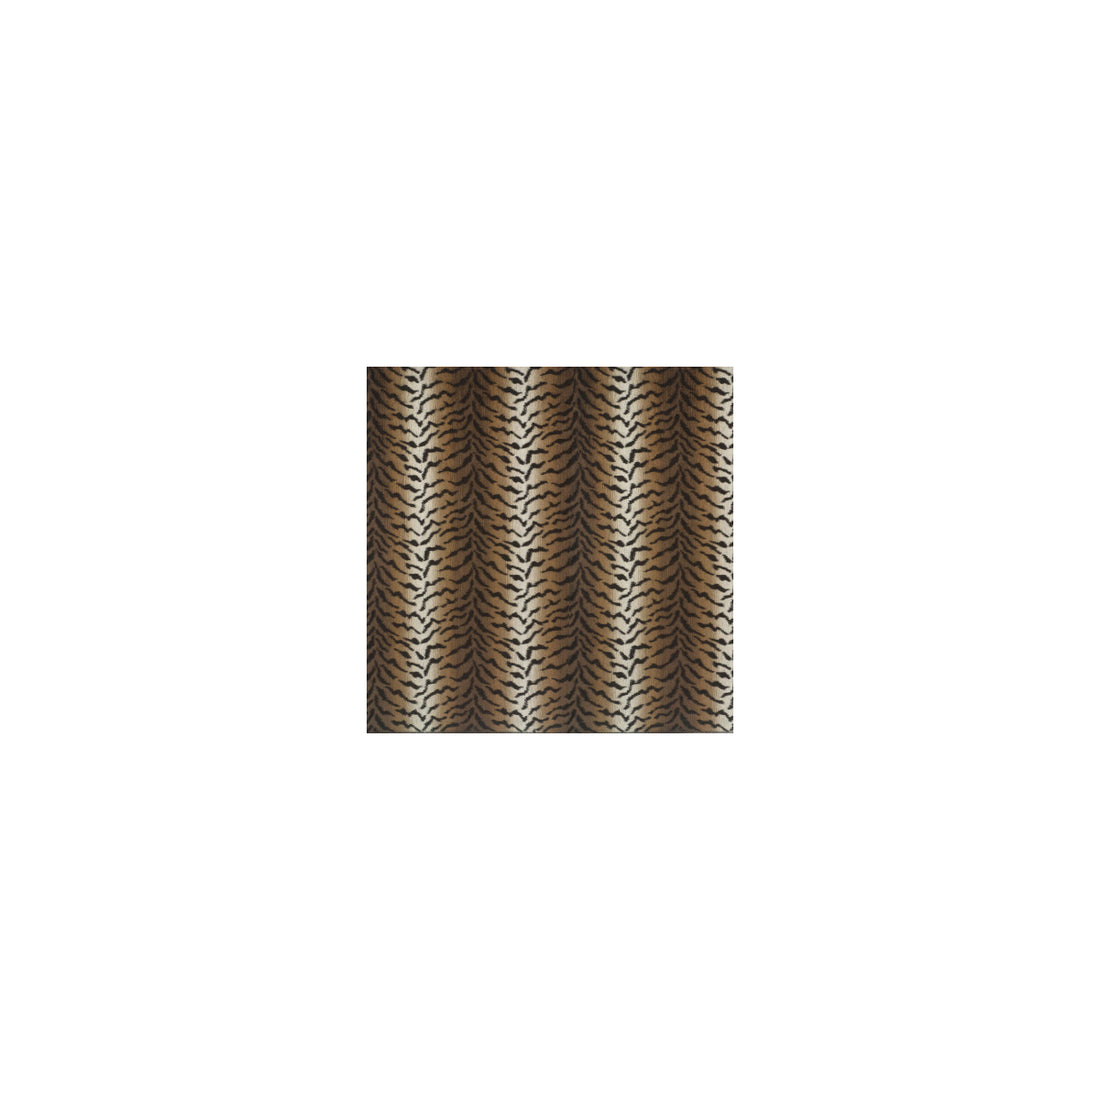 Kravet Design fabric in 34715-6 color - pattern 34715.6.0 - by Kravet Design in the Gis collection